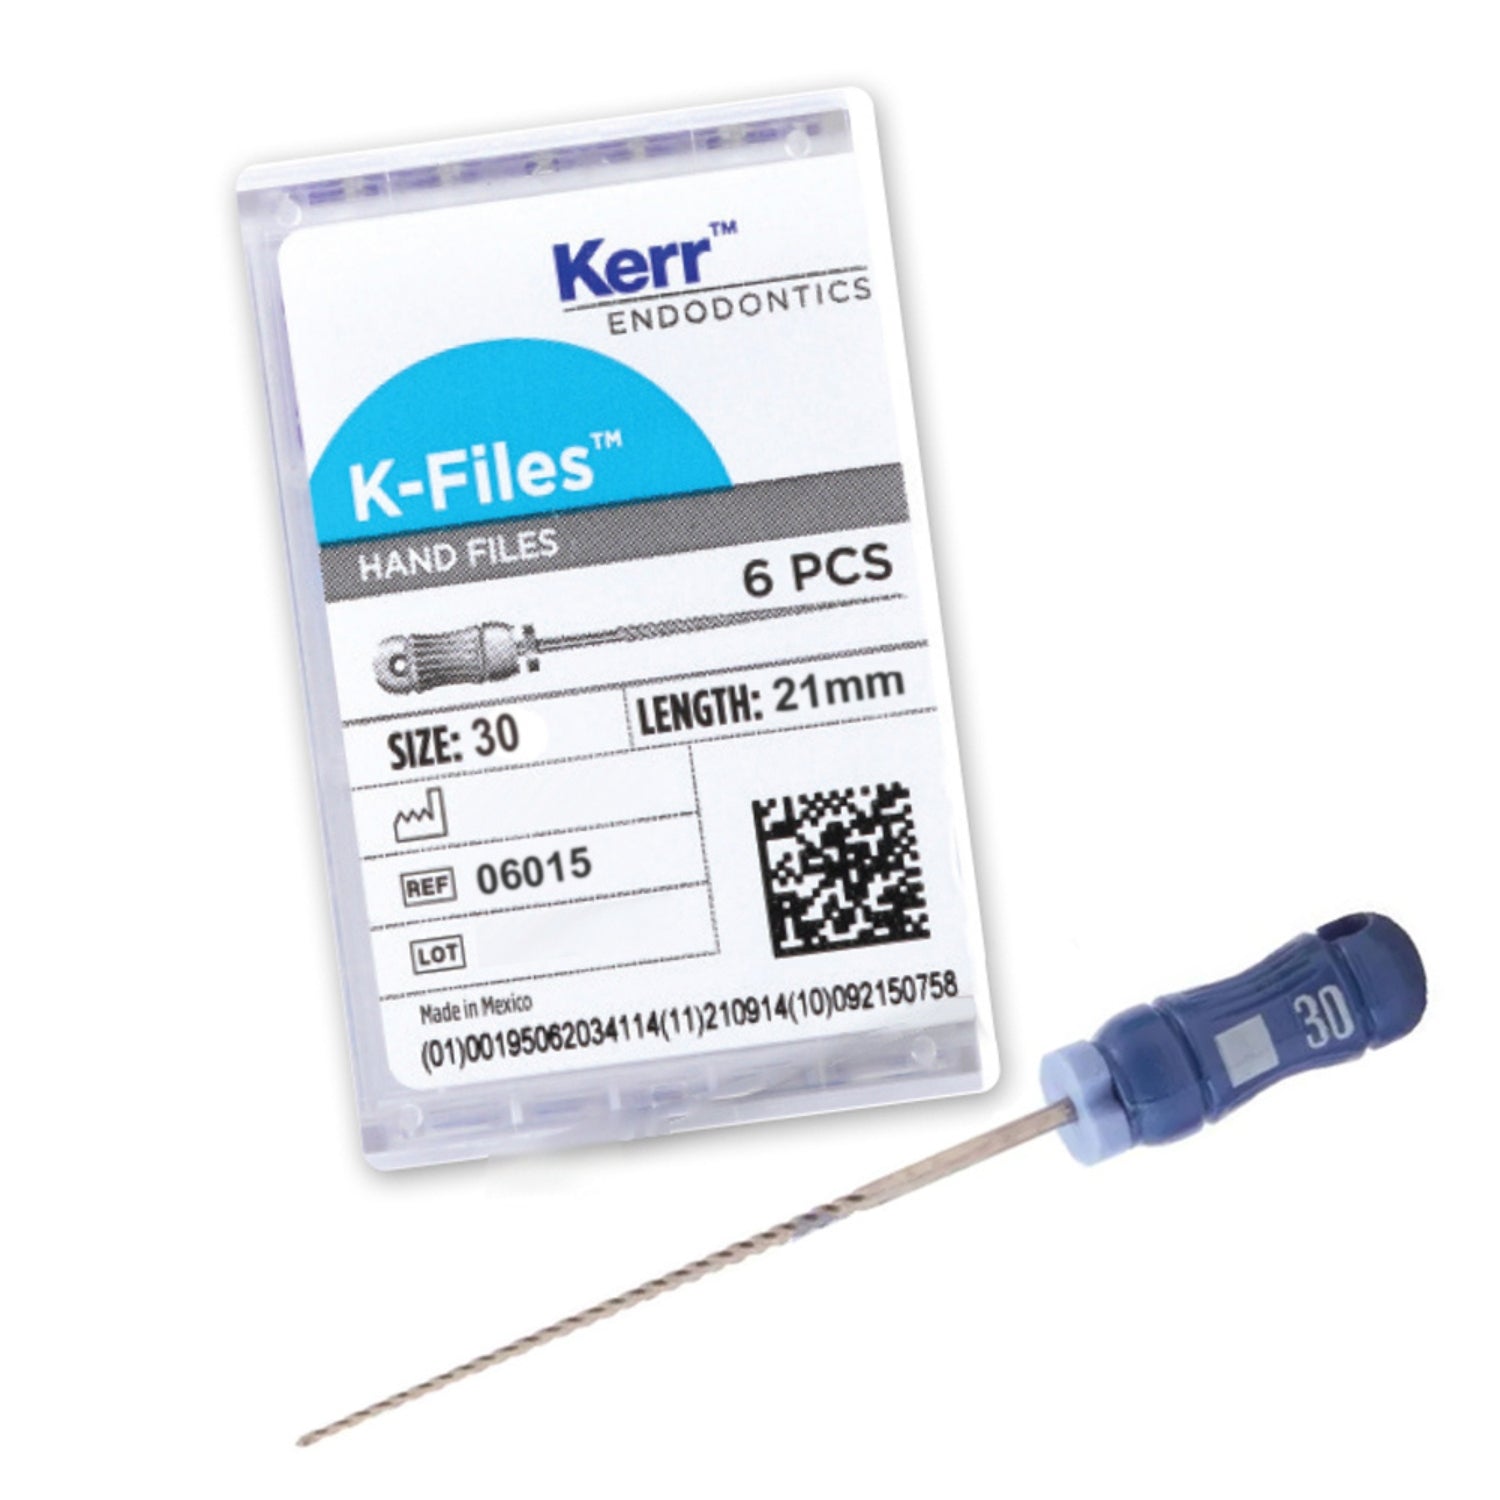 kerr-endodontics-k-files-30-hand-files-21mm-box-of-6